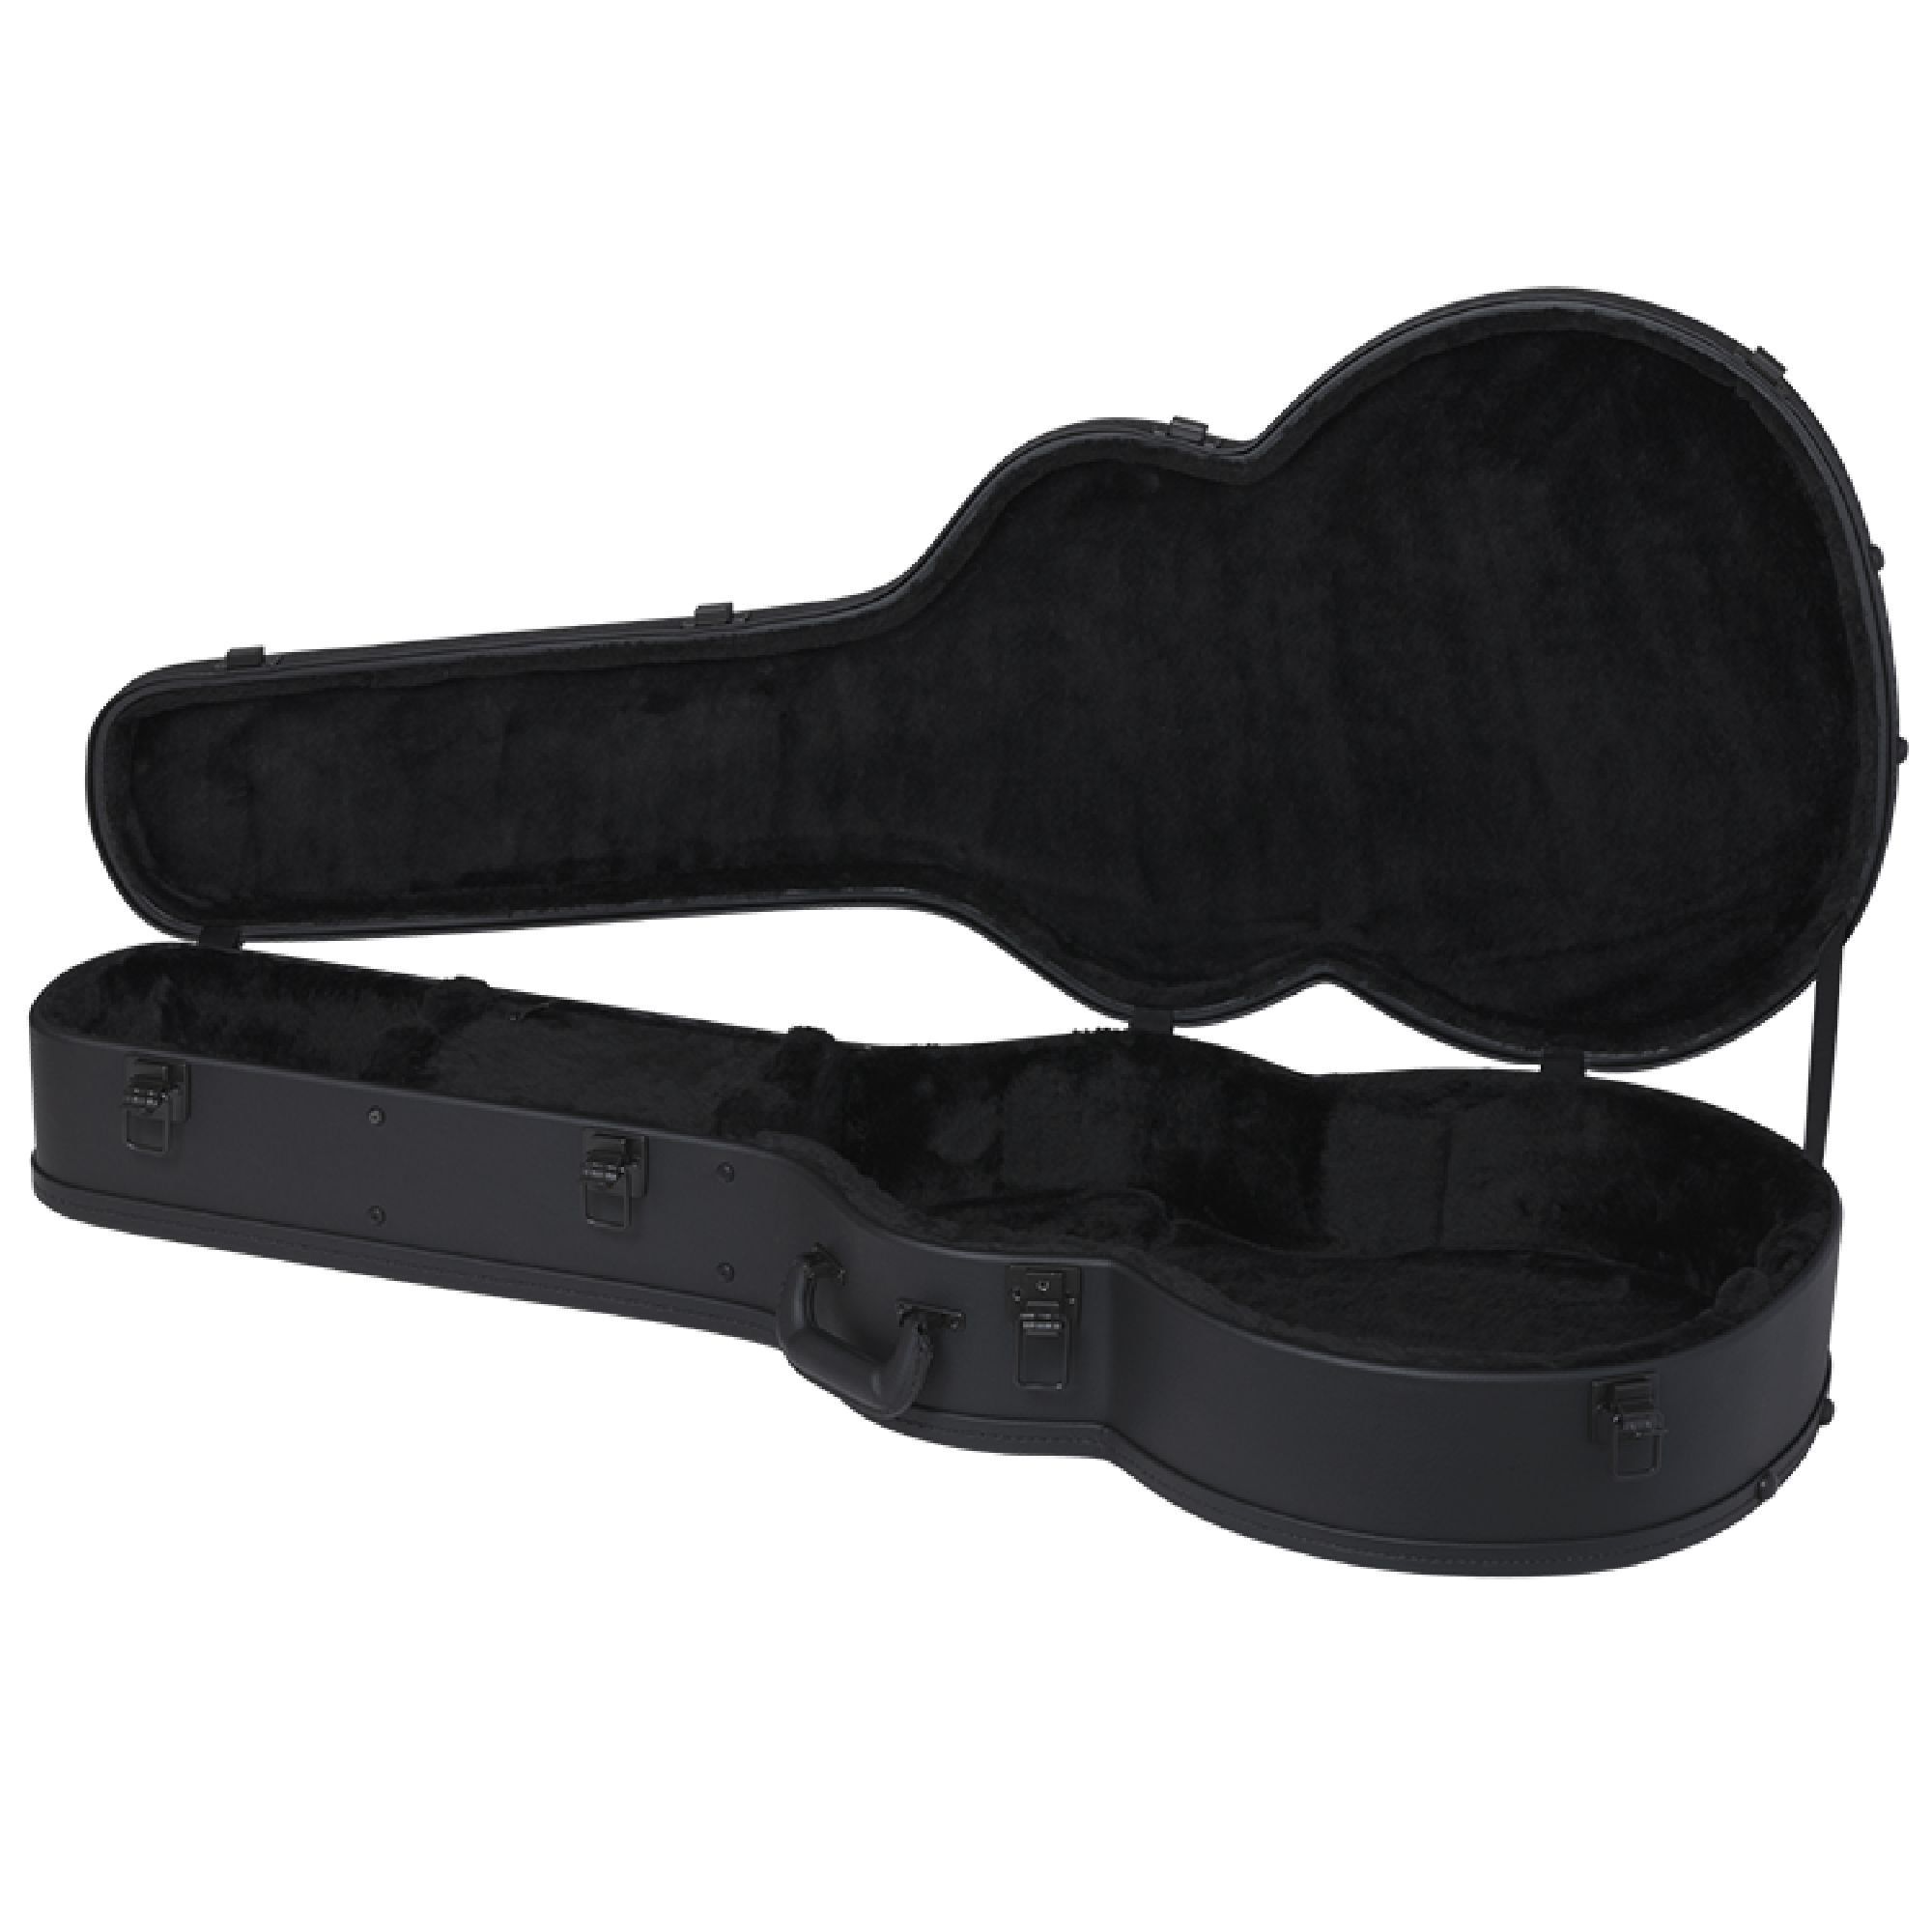 Gibson SJ-200 Modern Hardshell Case Black Чехлы и кейсы для акустических гитар